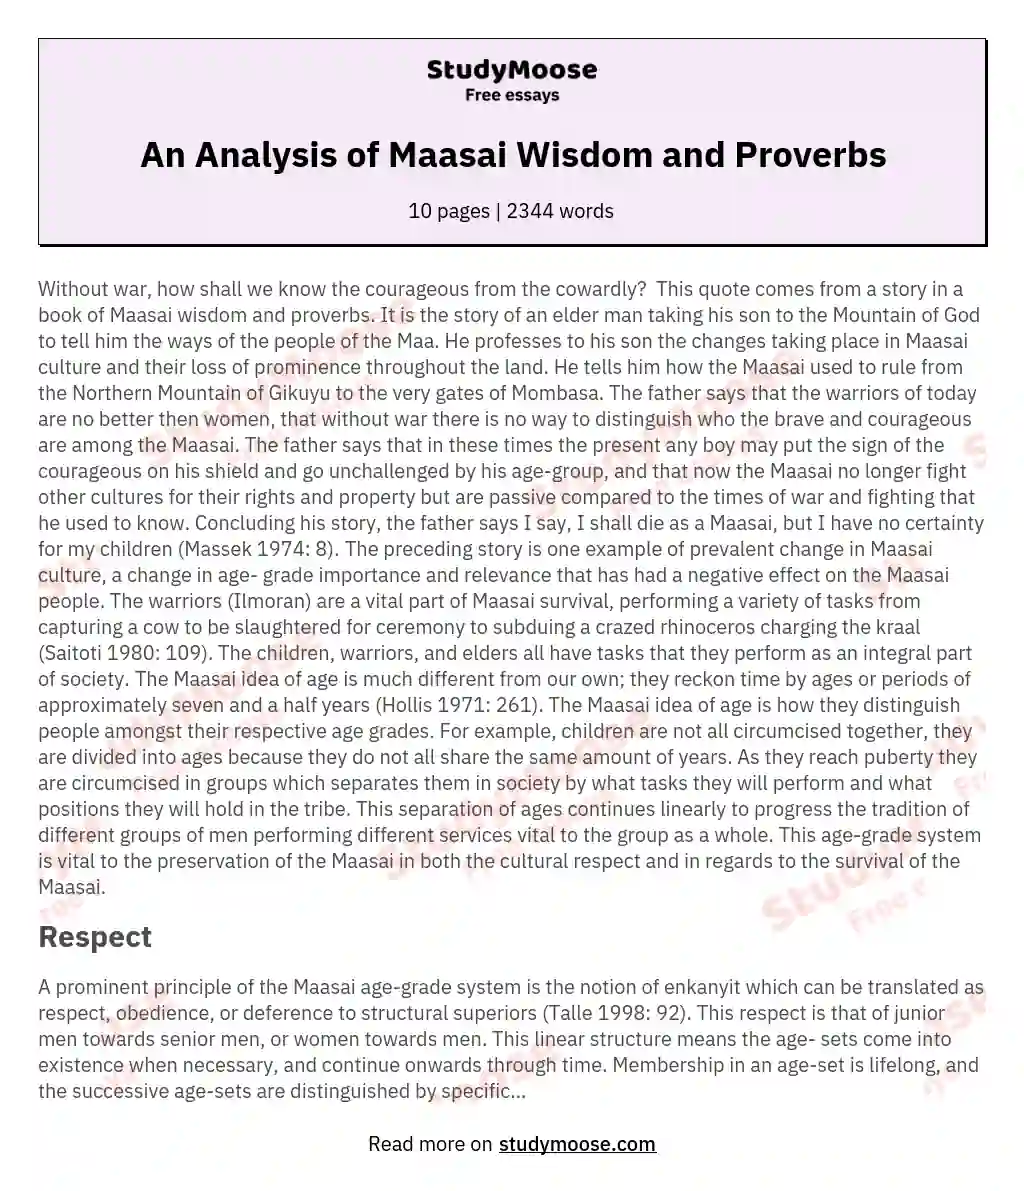 An Analysis of Maasai Wisdom and Proverbs essay